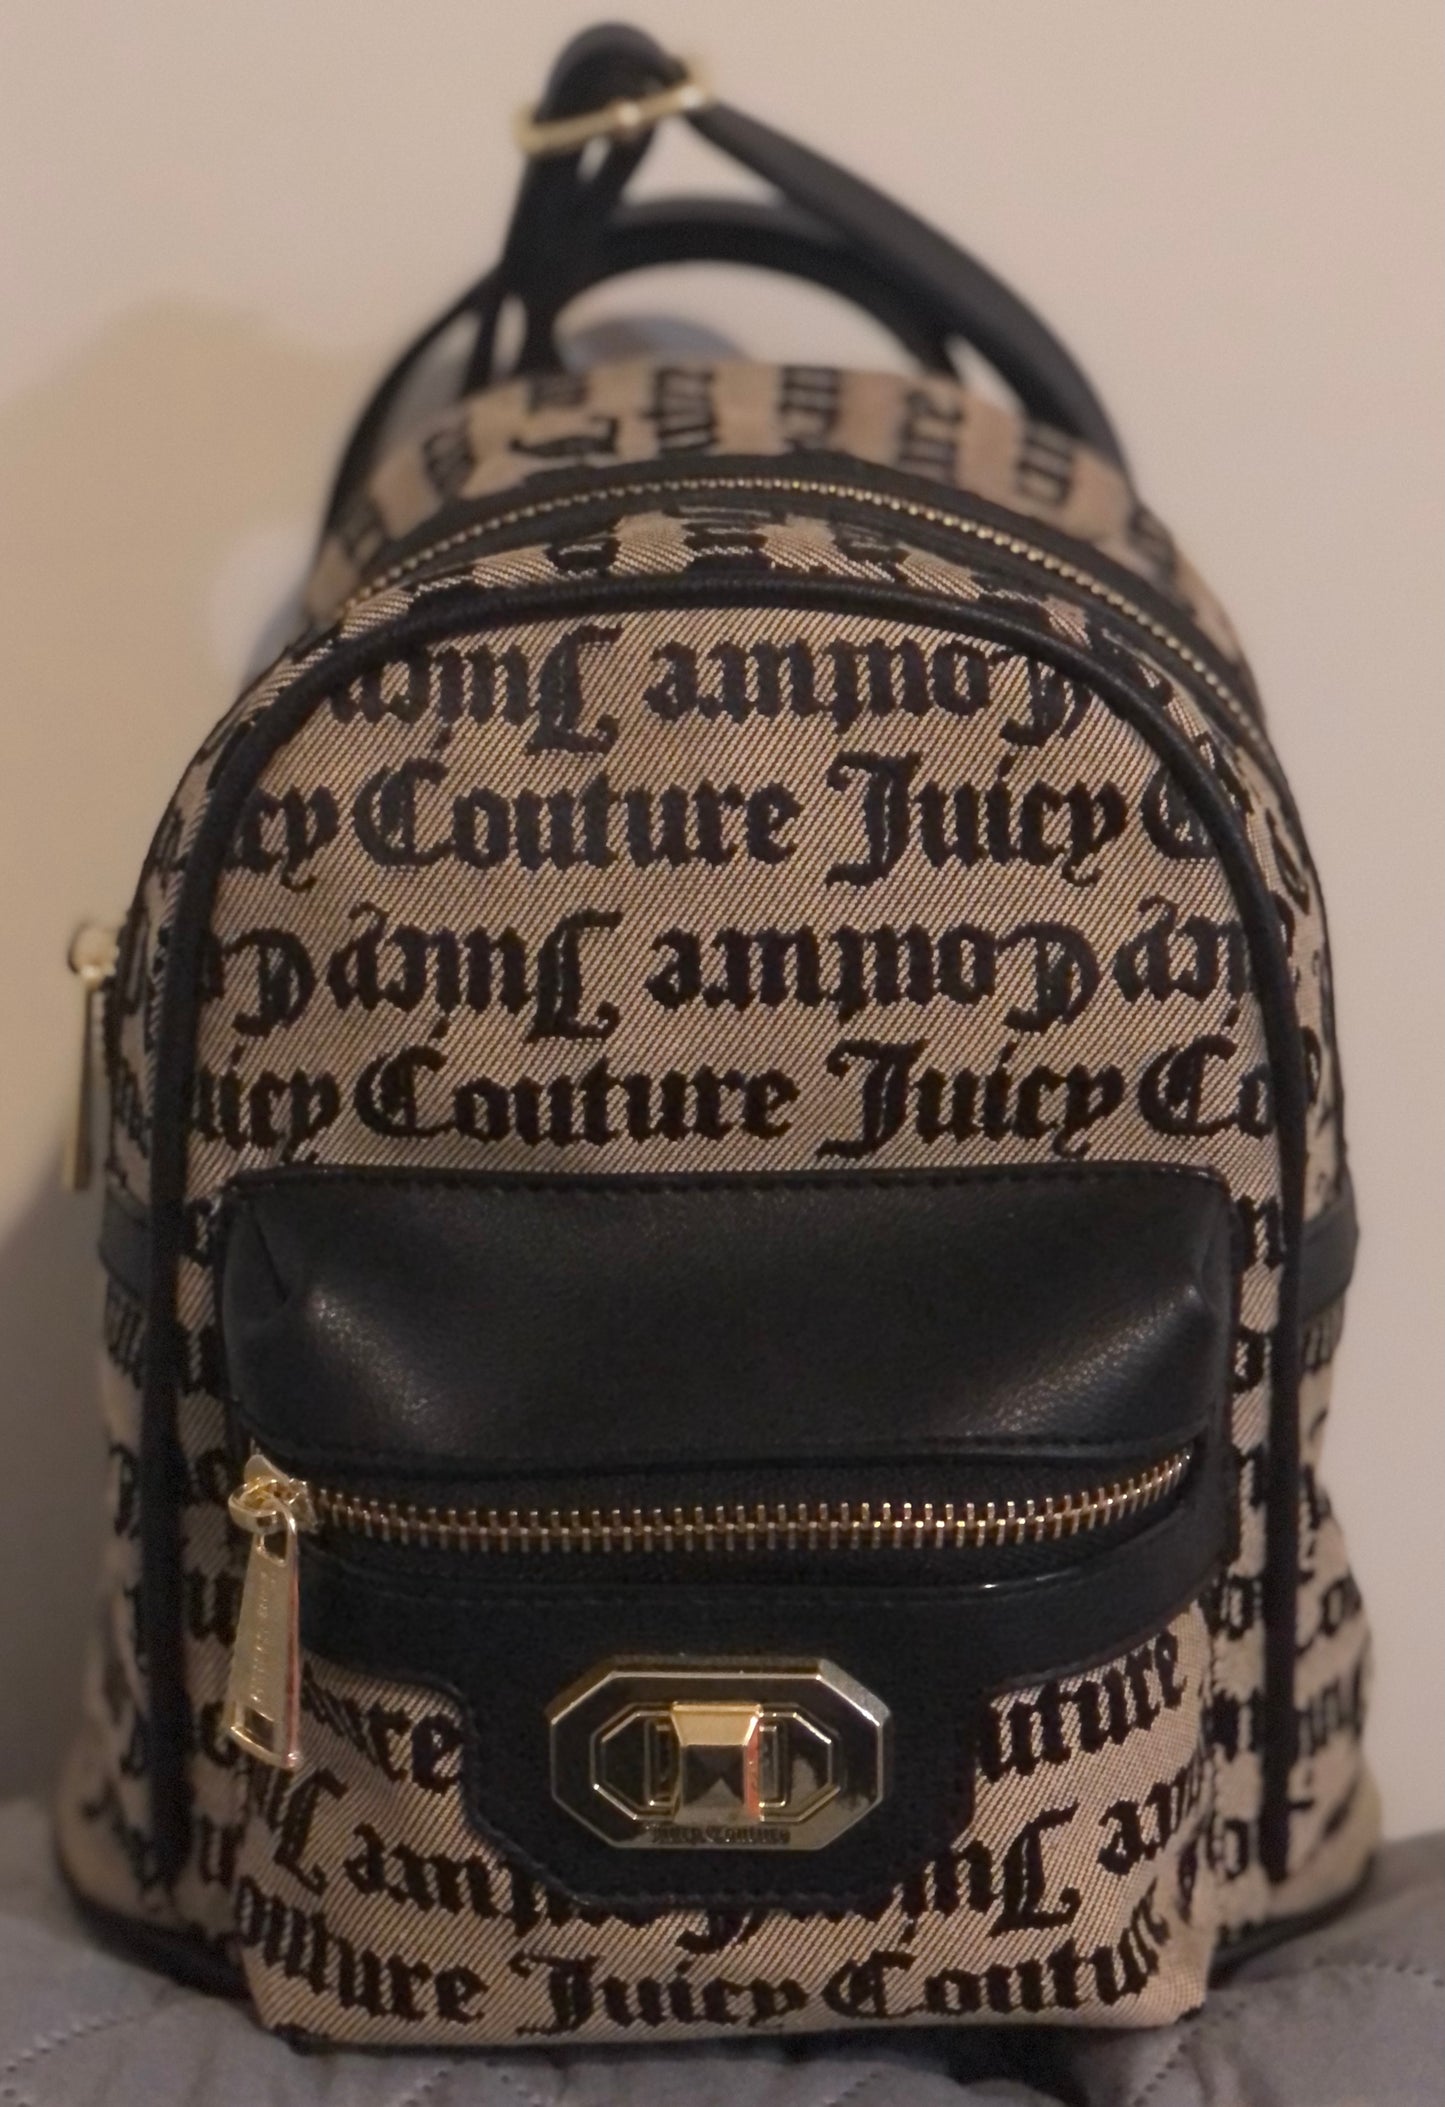 Juicy Couture Love Is Juicy Backpack